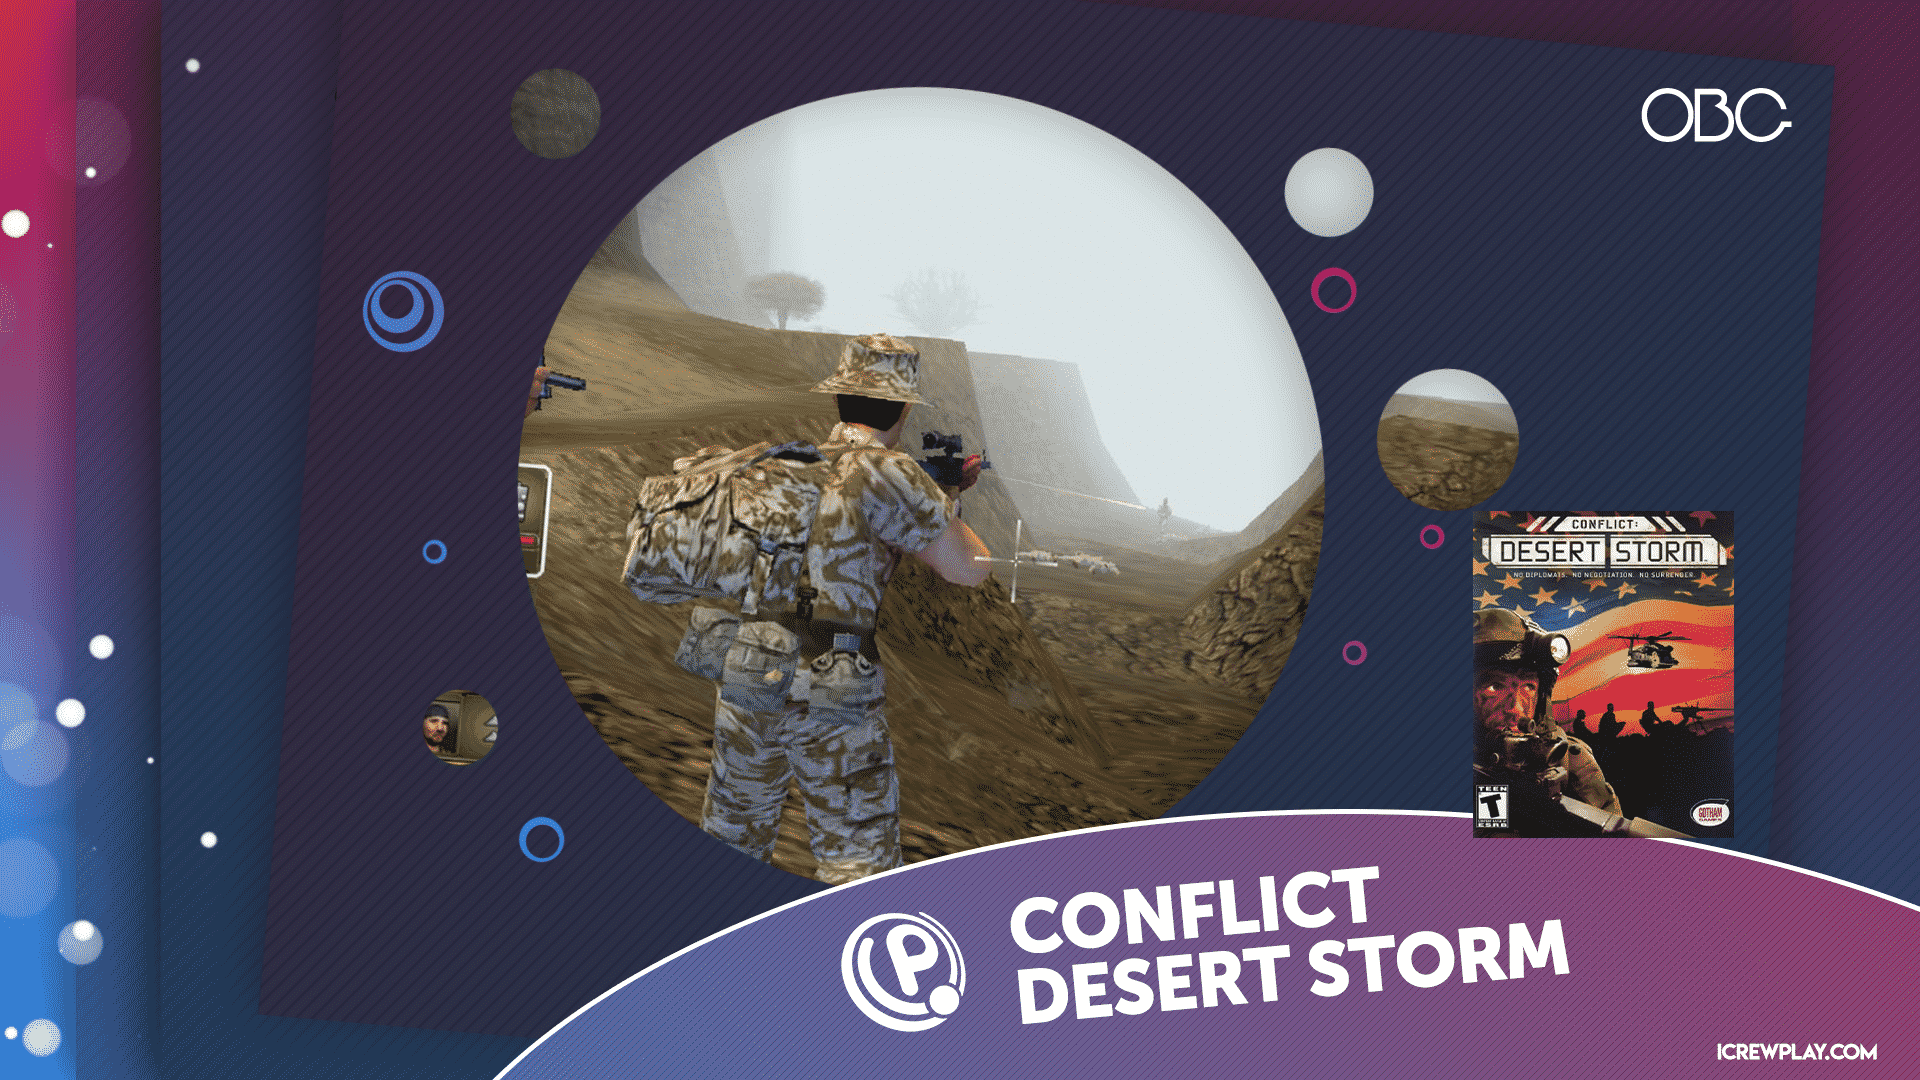 OBG Conflict Desert Storm